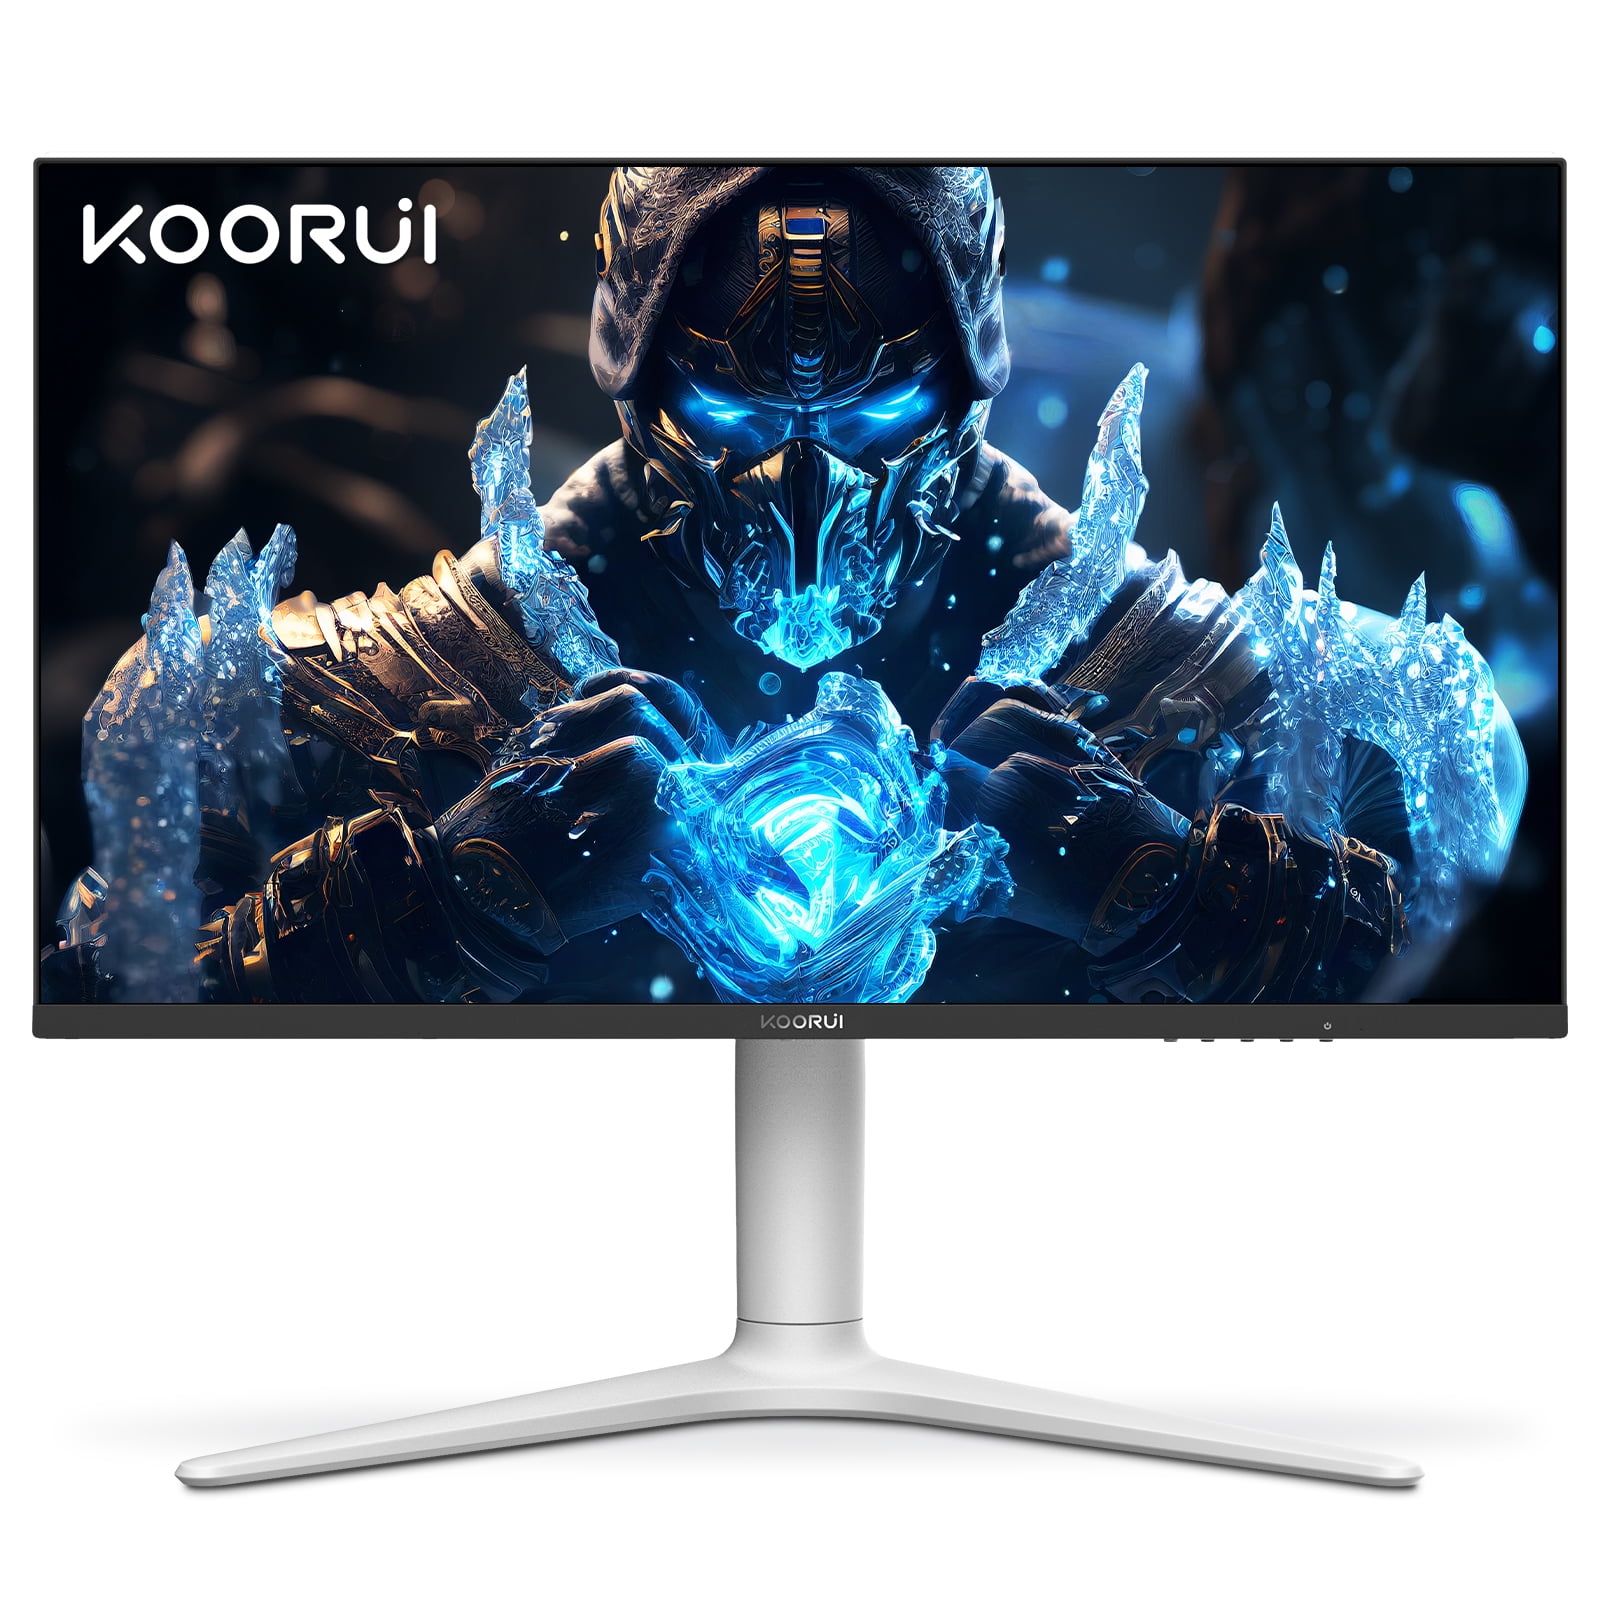 KOORUI GN10 27” Gaming Monitor, WQHD (2560 x 1440), 240HZ, Mini